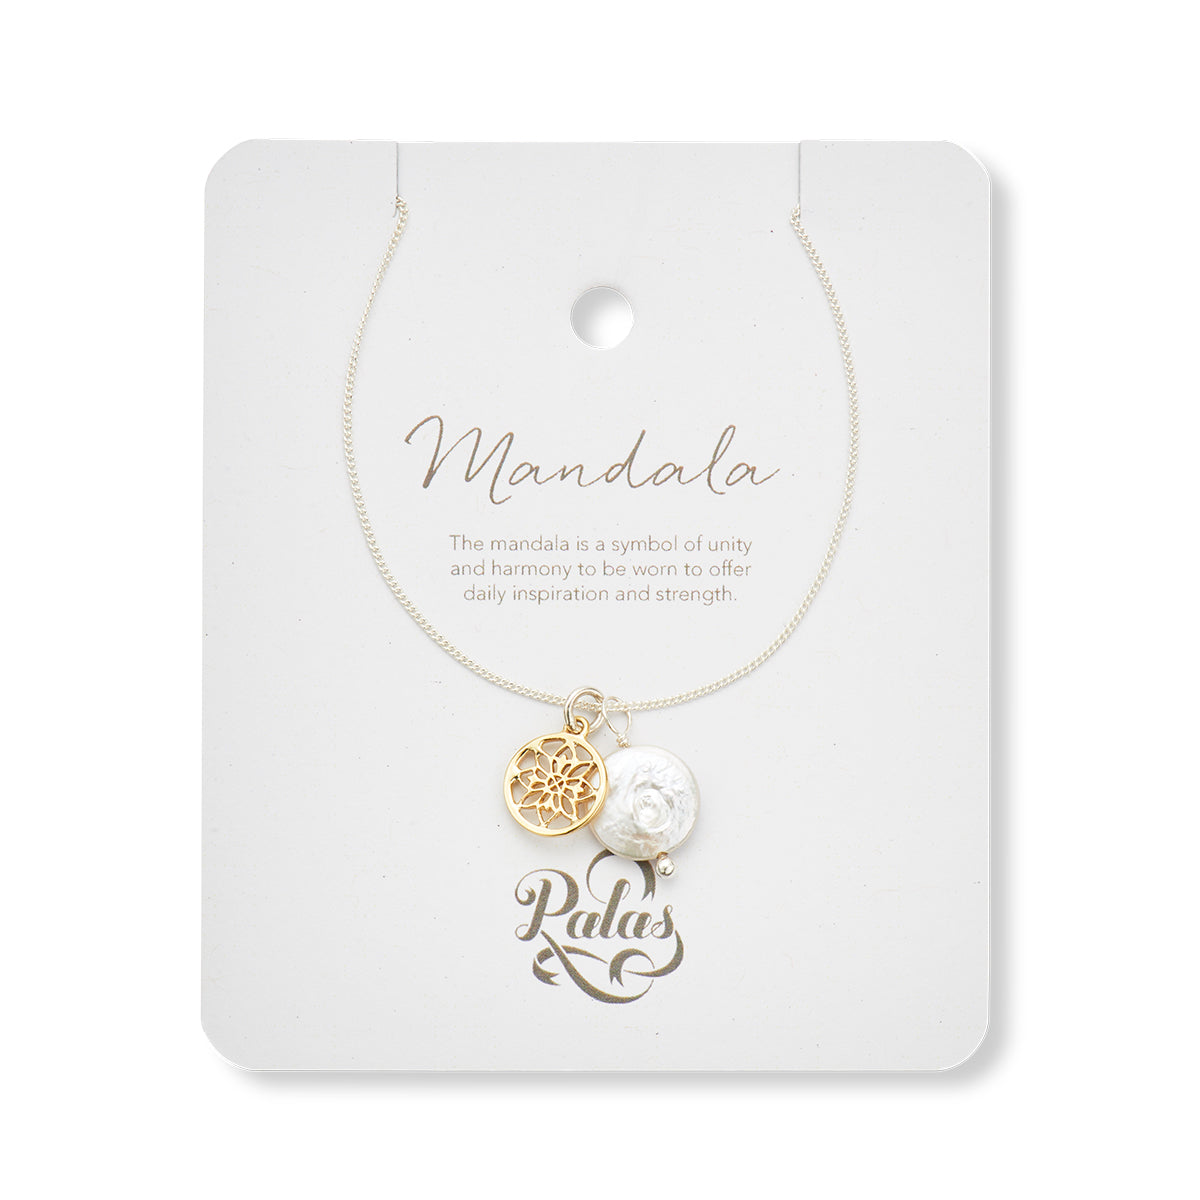 Mandala and pearl amulet necklace